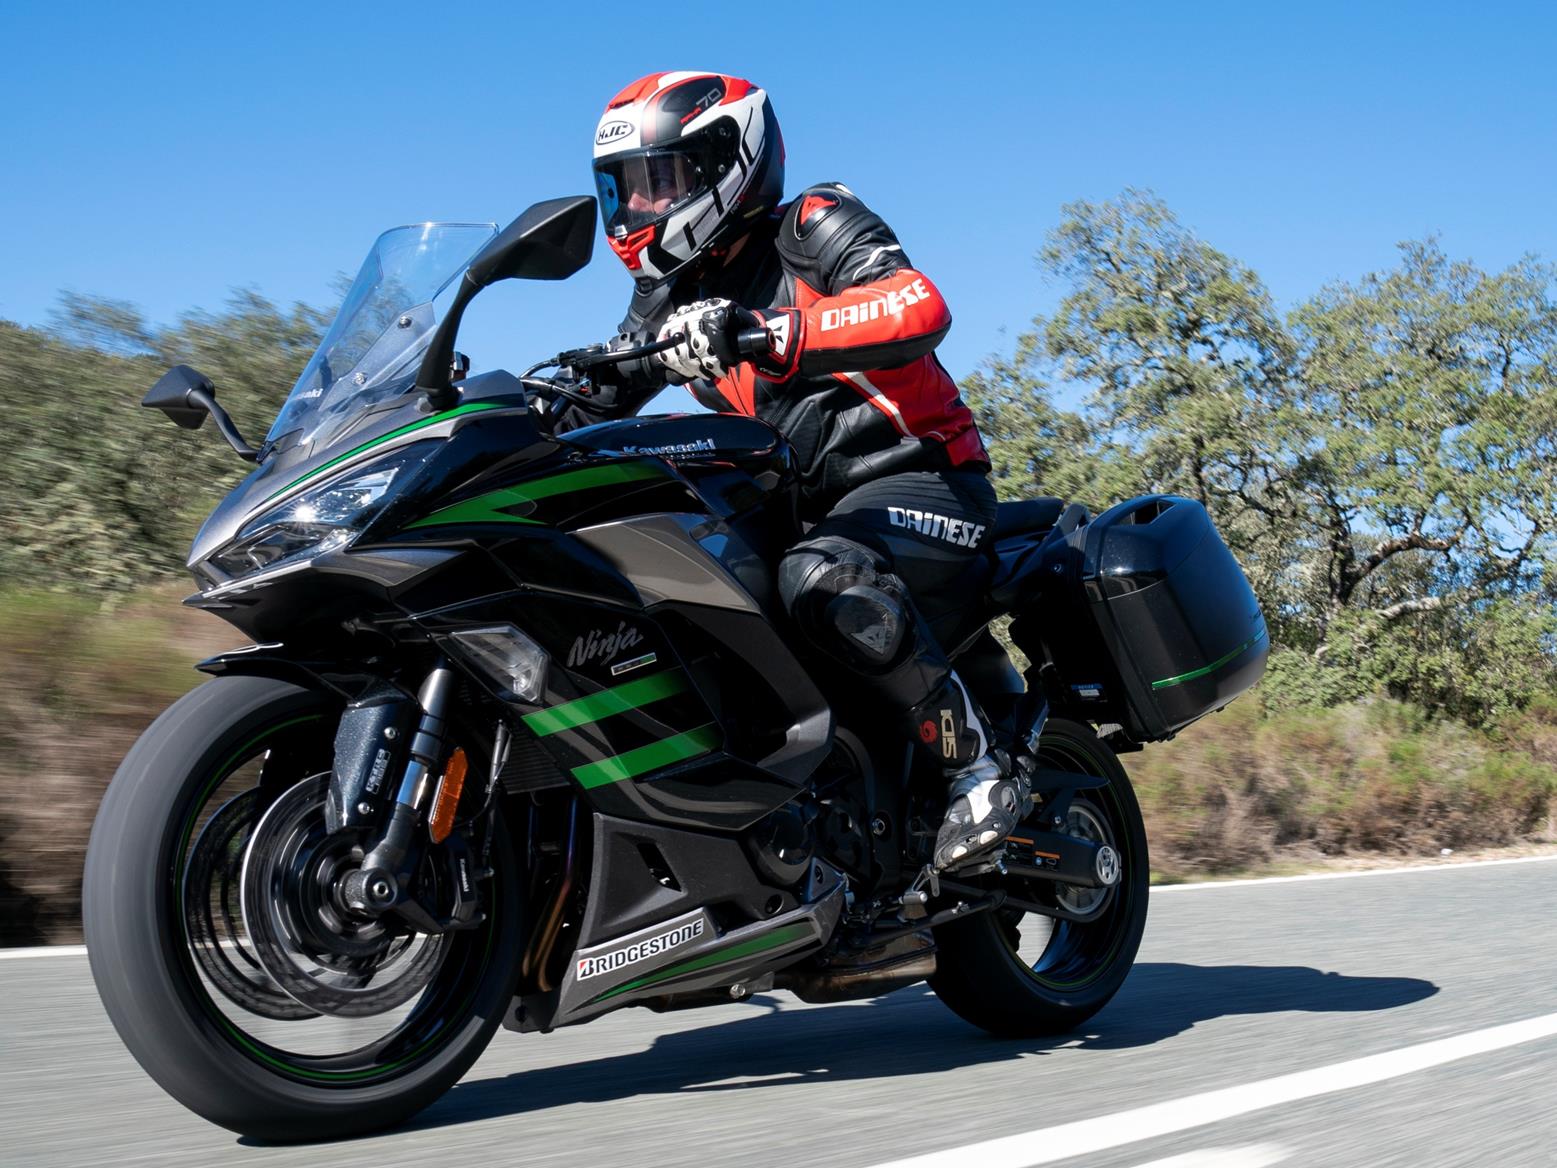 2022 Kawasaki Ninja 1000SX Review: Why I Bought One